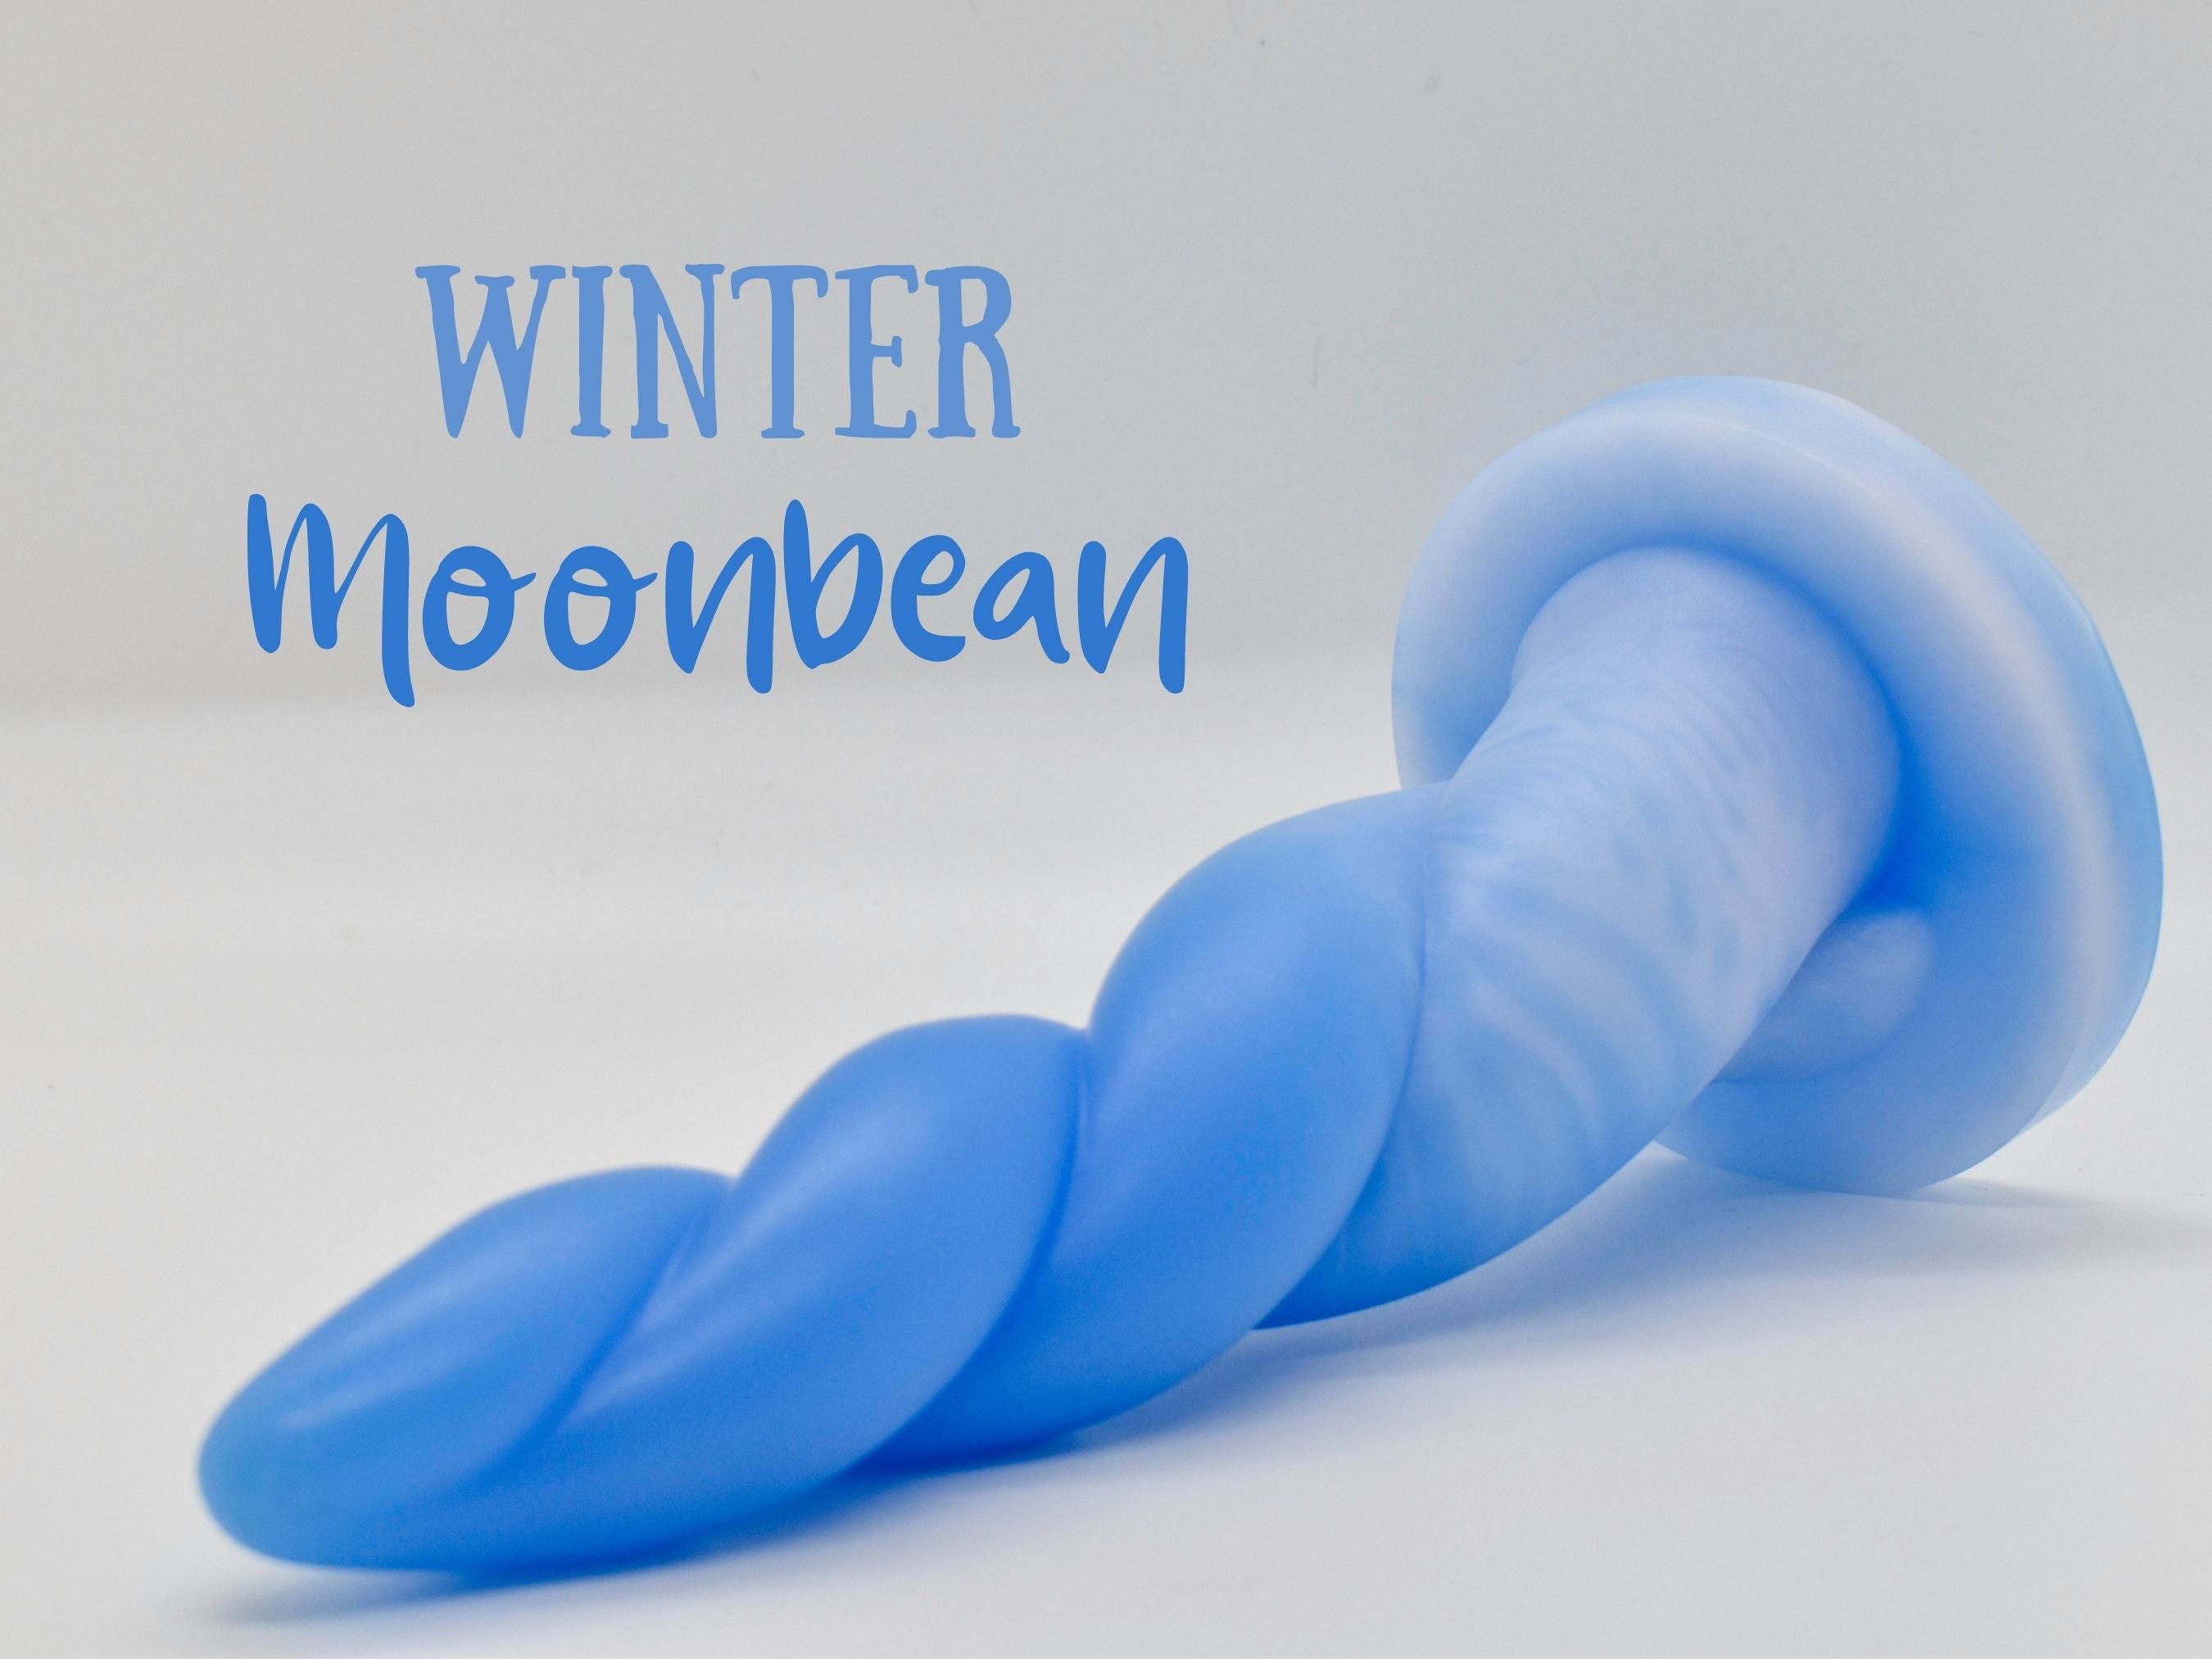 Winter Moonbean